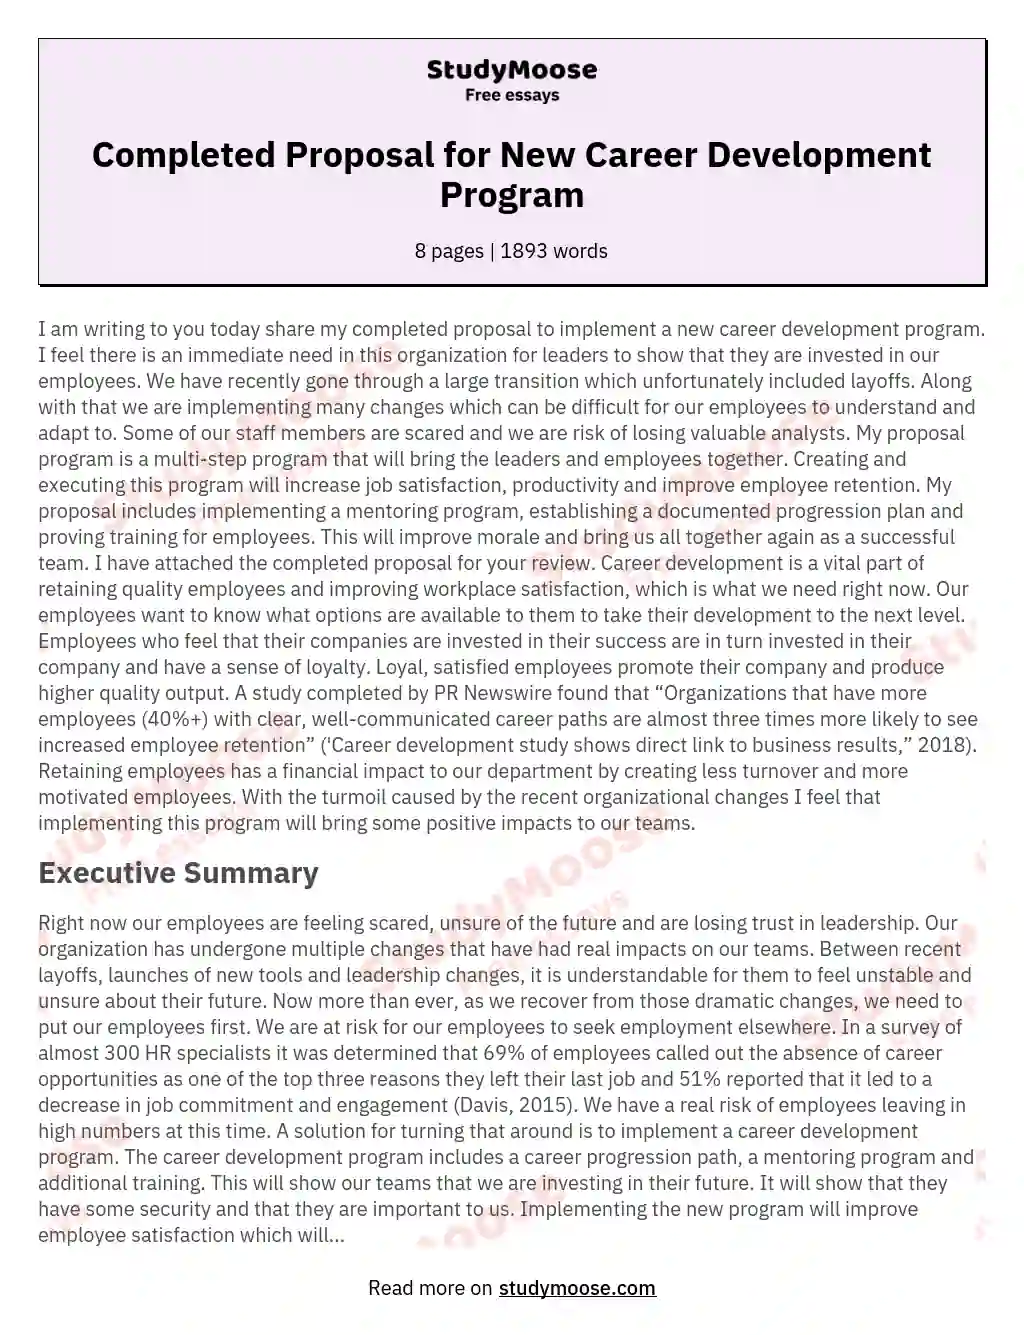 Completed Proposal for New Career Development Program essay